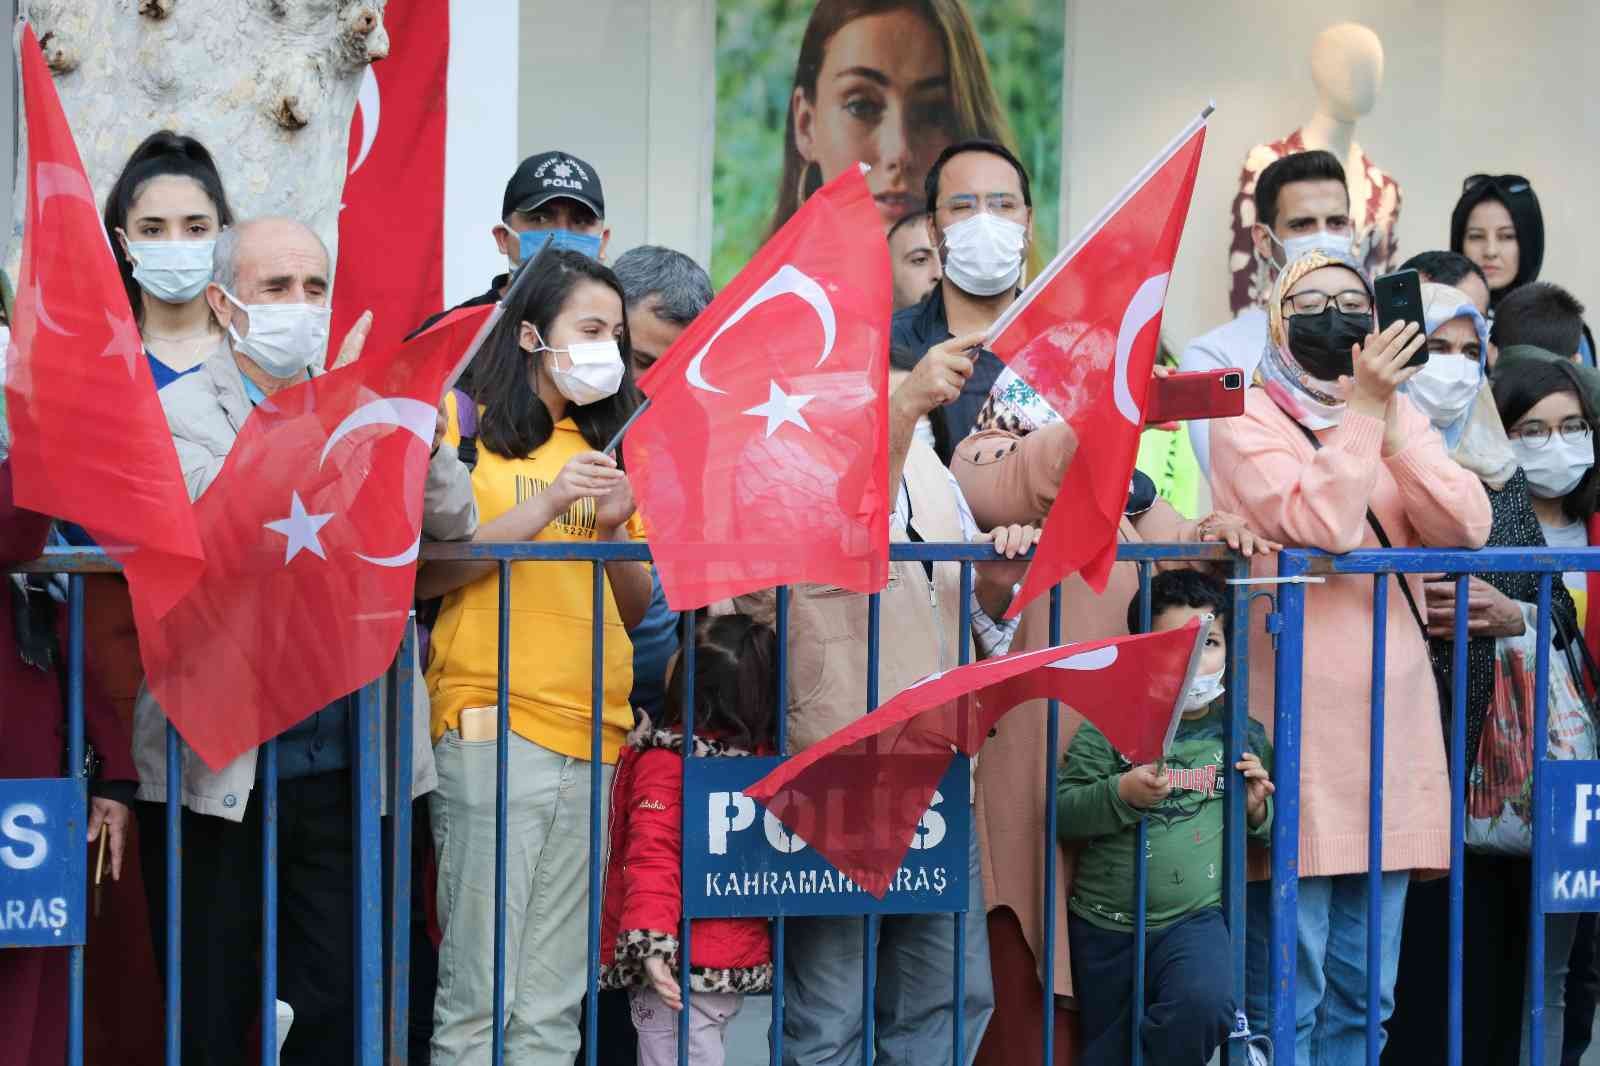 Kahramanmaraş’ta Cumhuriyet Bayramı coşkusu #kahramanmaras